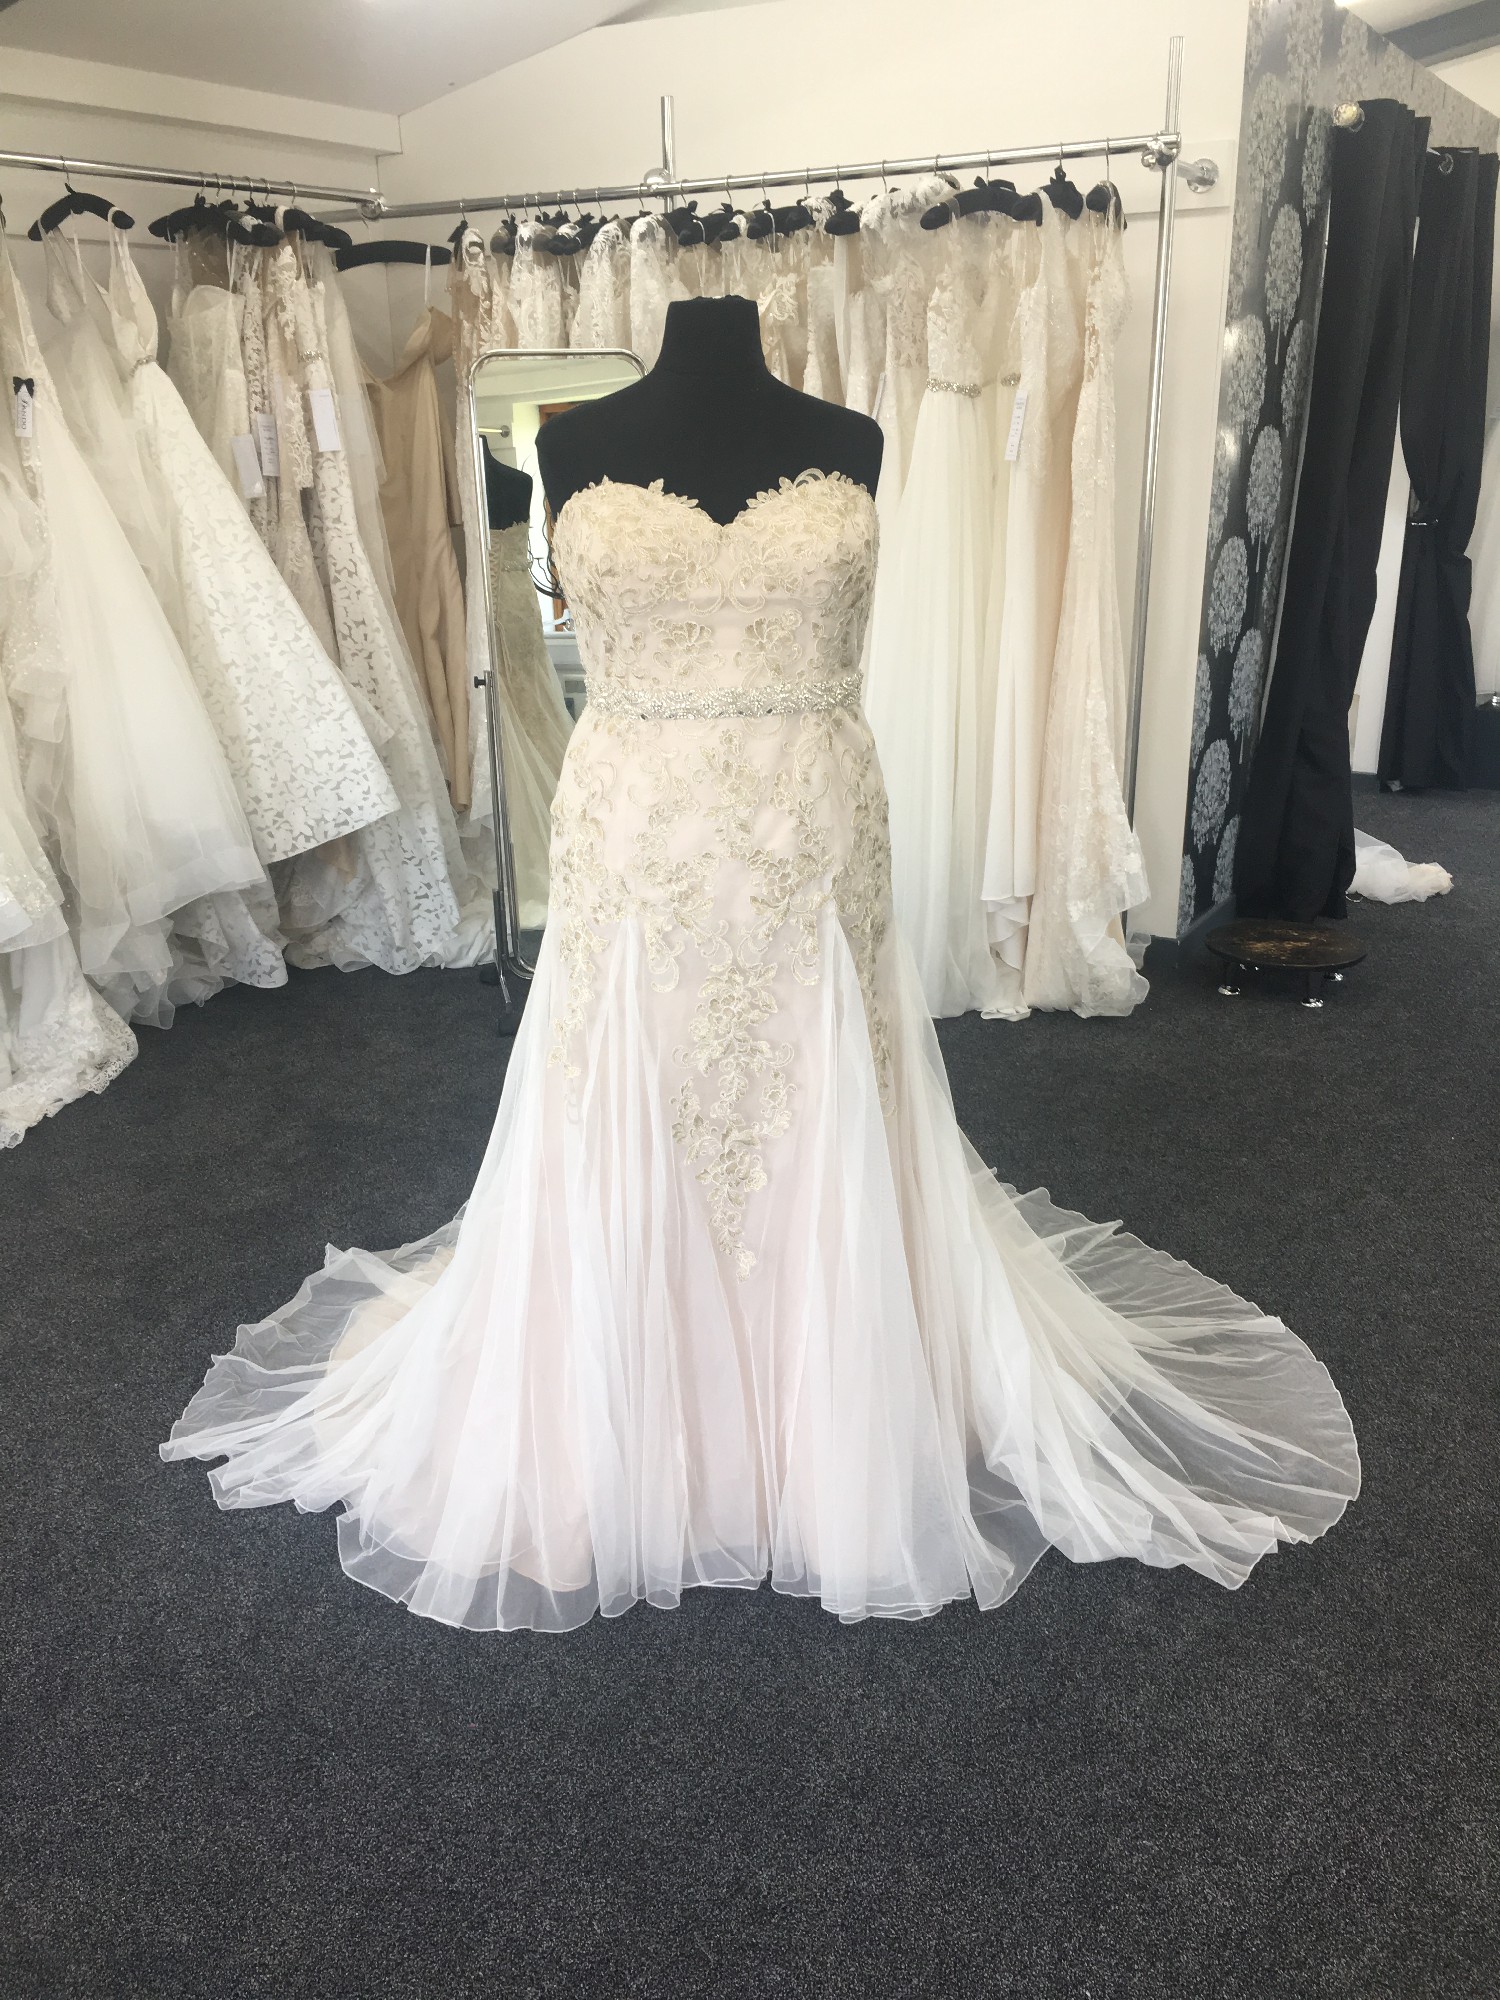 Confetti & Lace Sample Wedding Dress Save 74% - Stillwhite